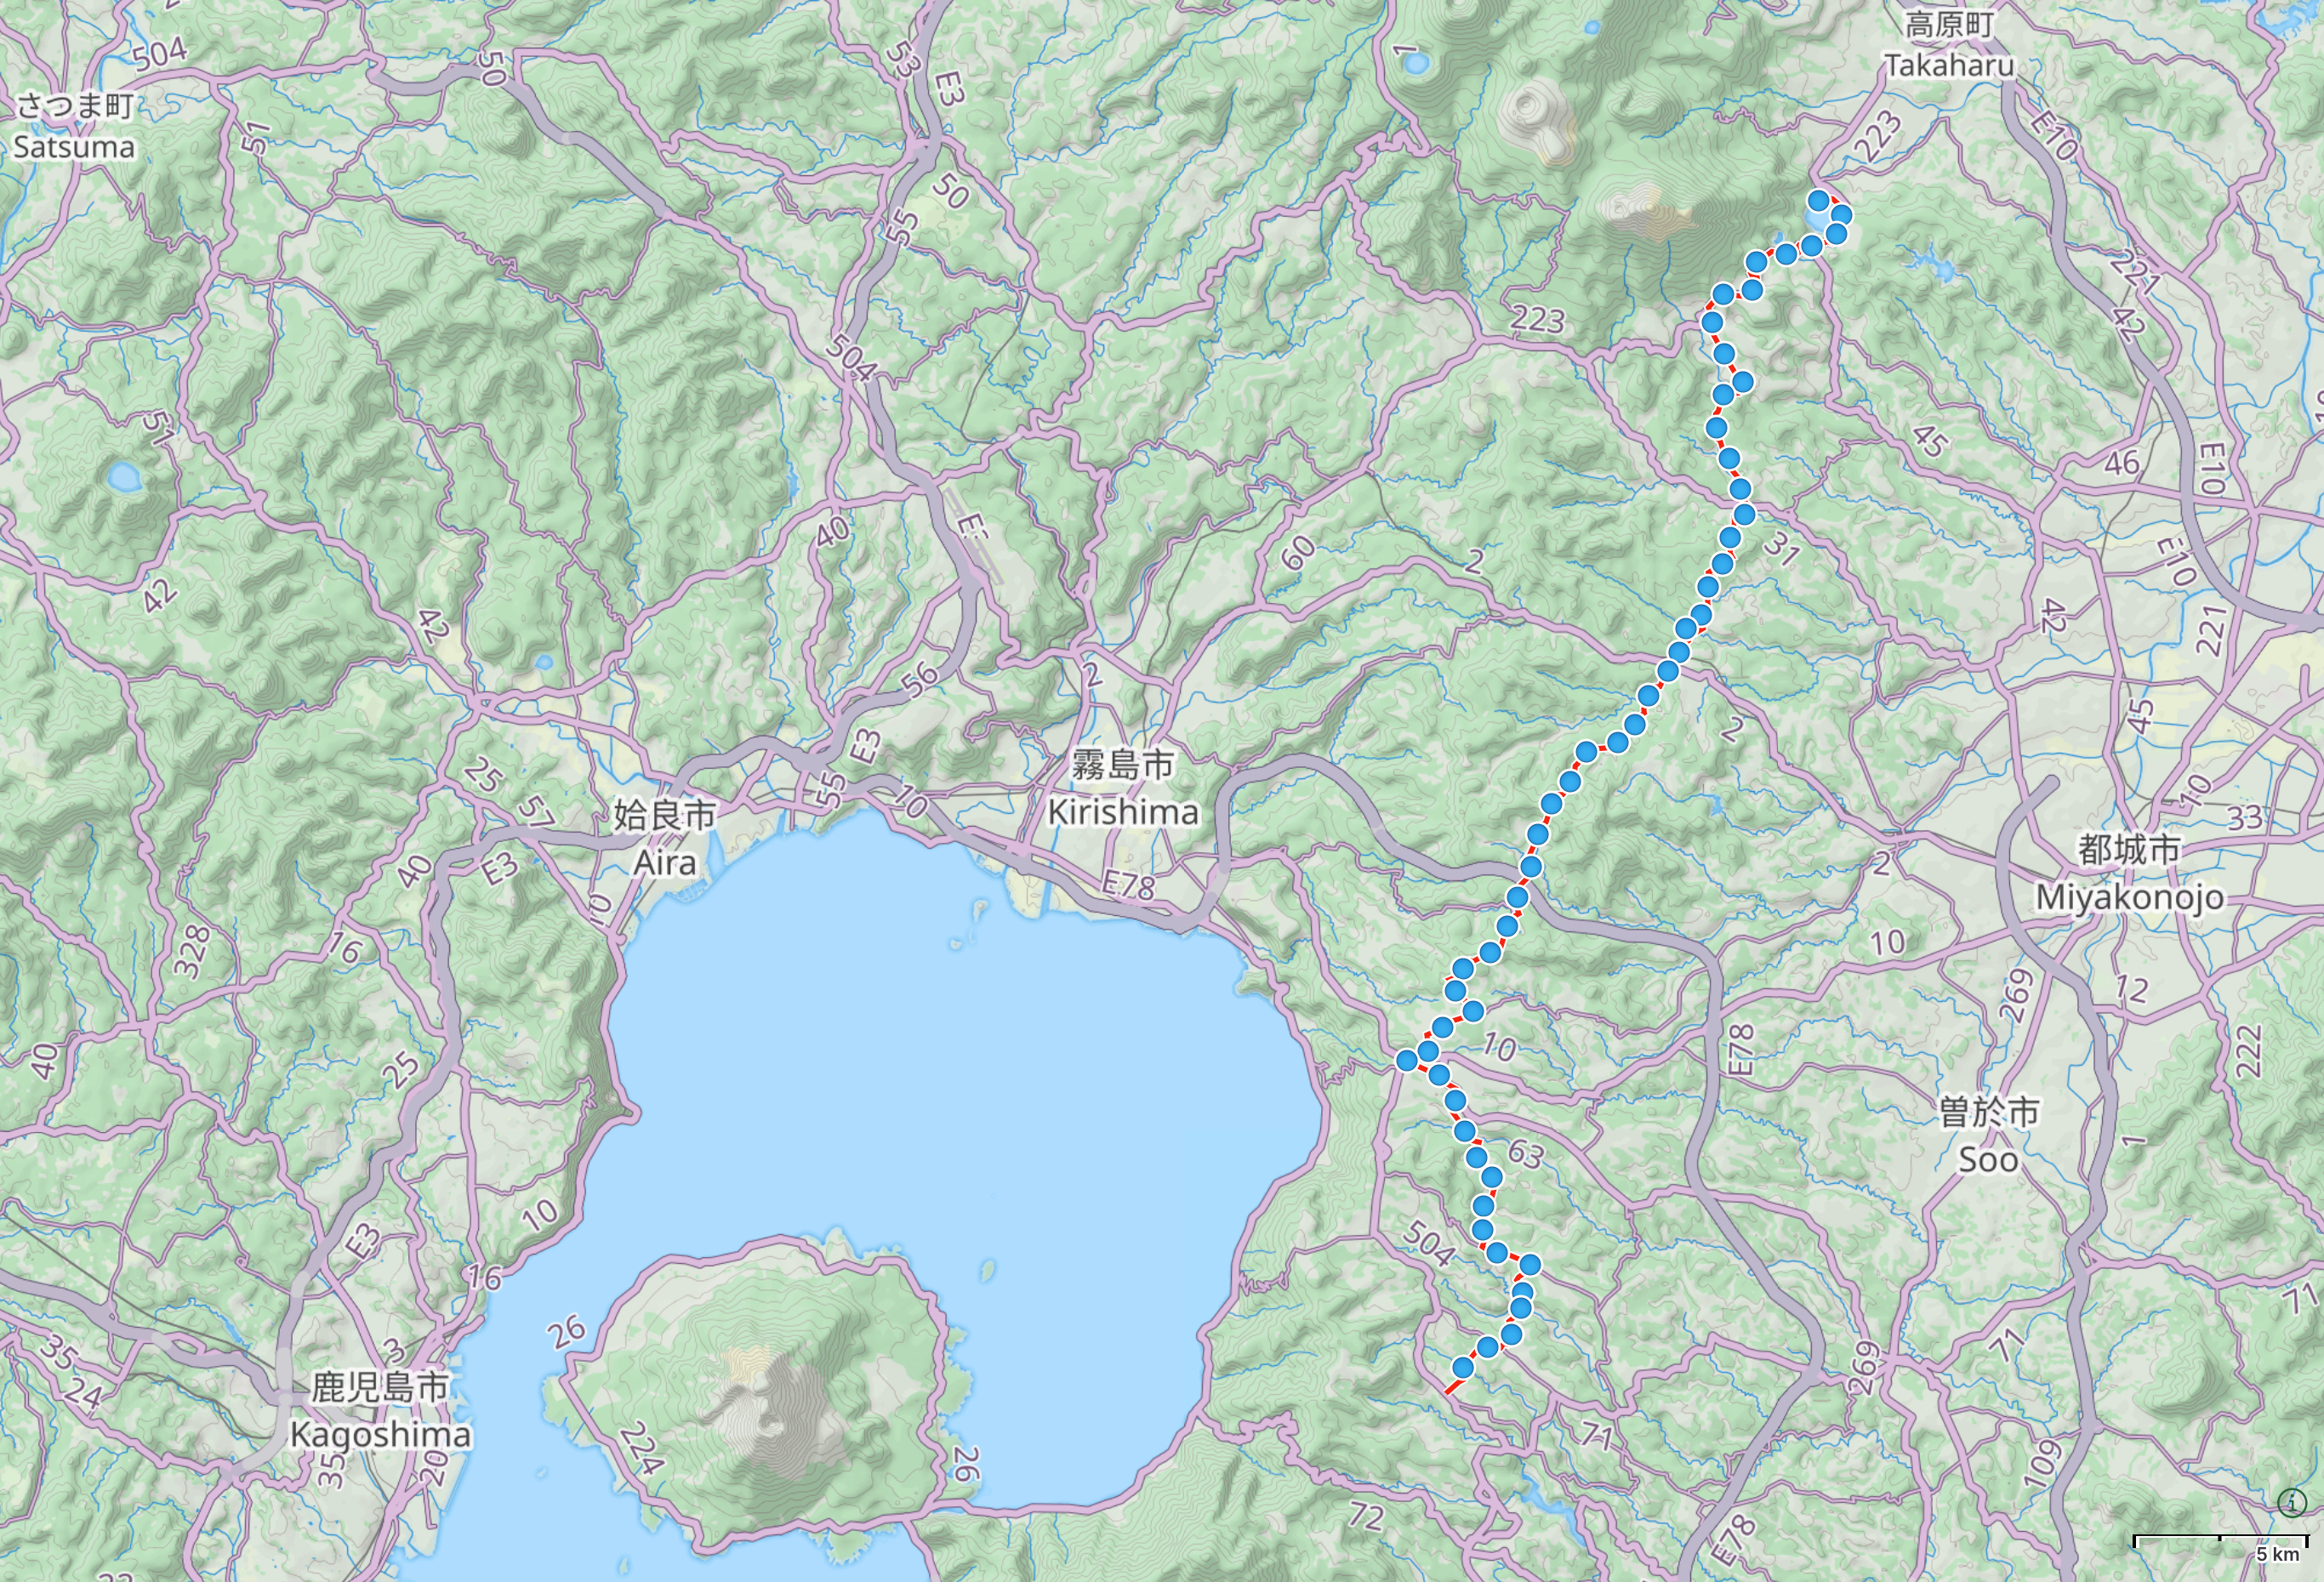 Map of southern Kyushu with author’s route from Kihoku, Kagoshima to Lake Miike, Miyazaki highlighted.